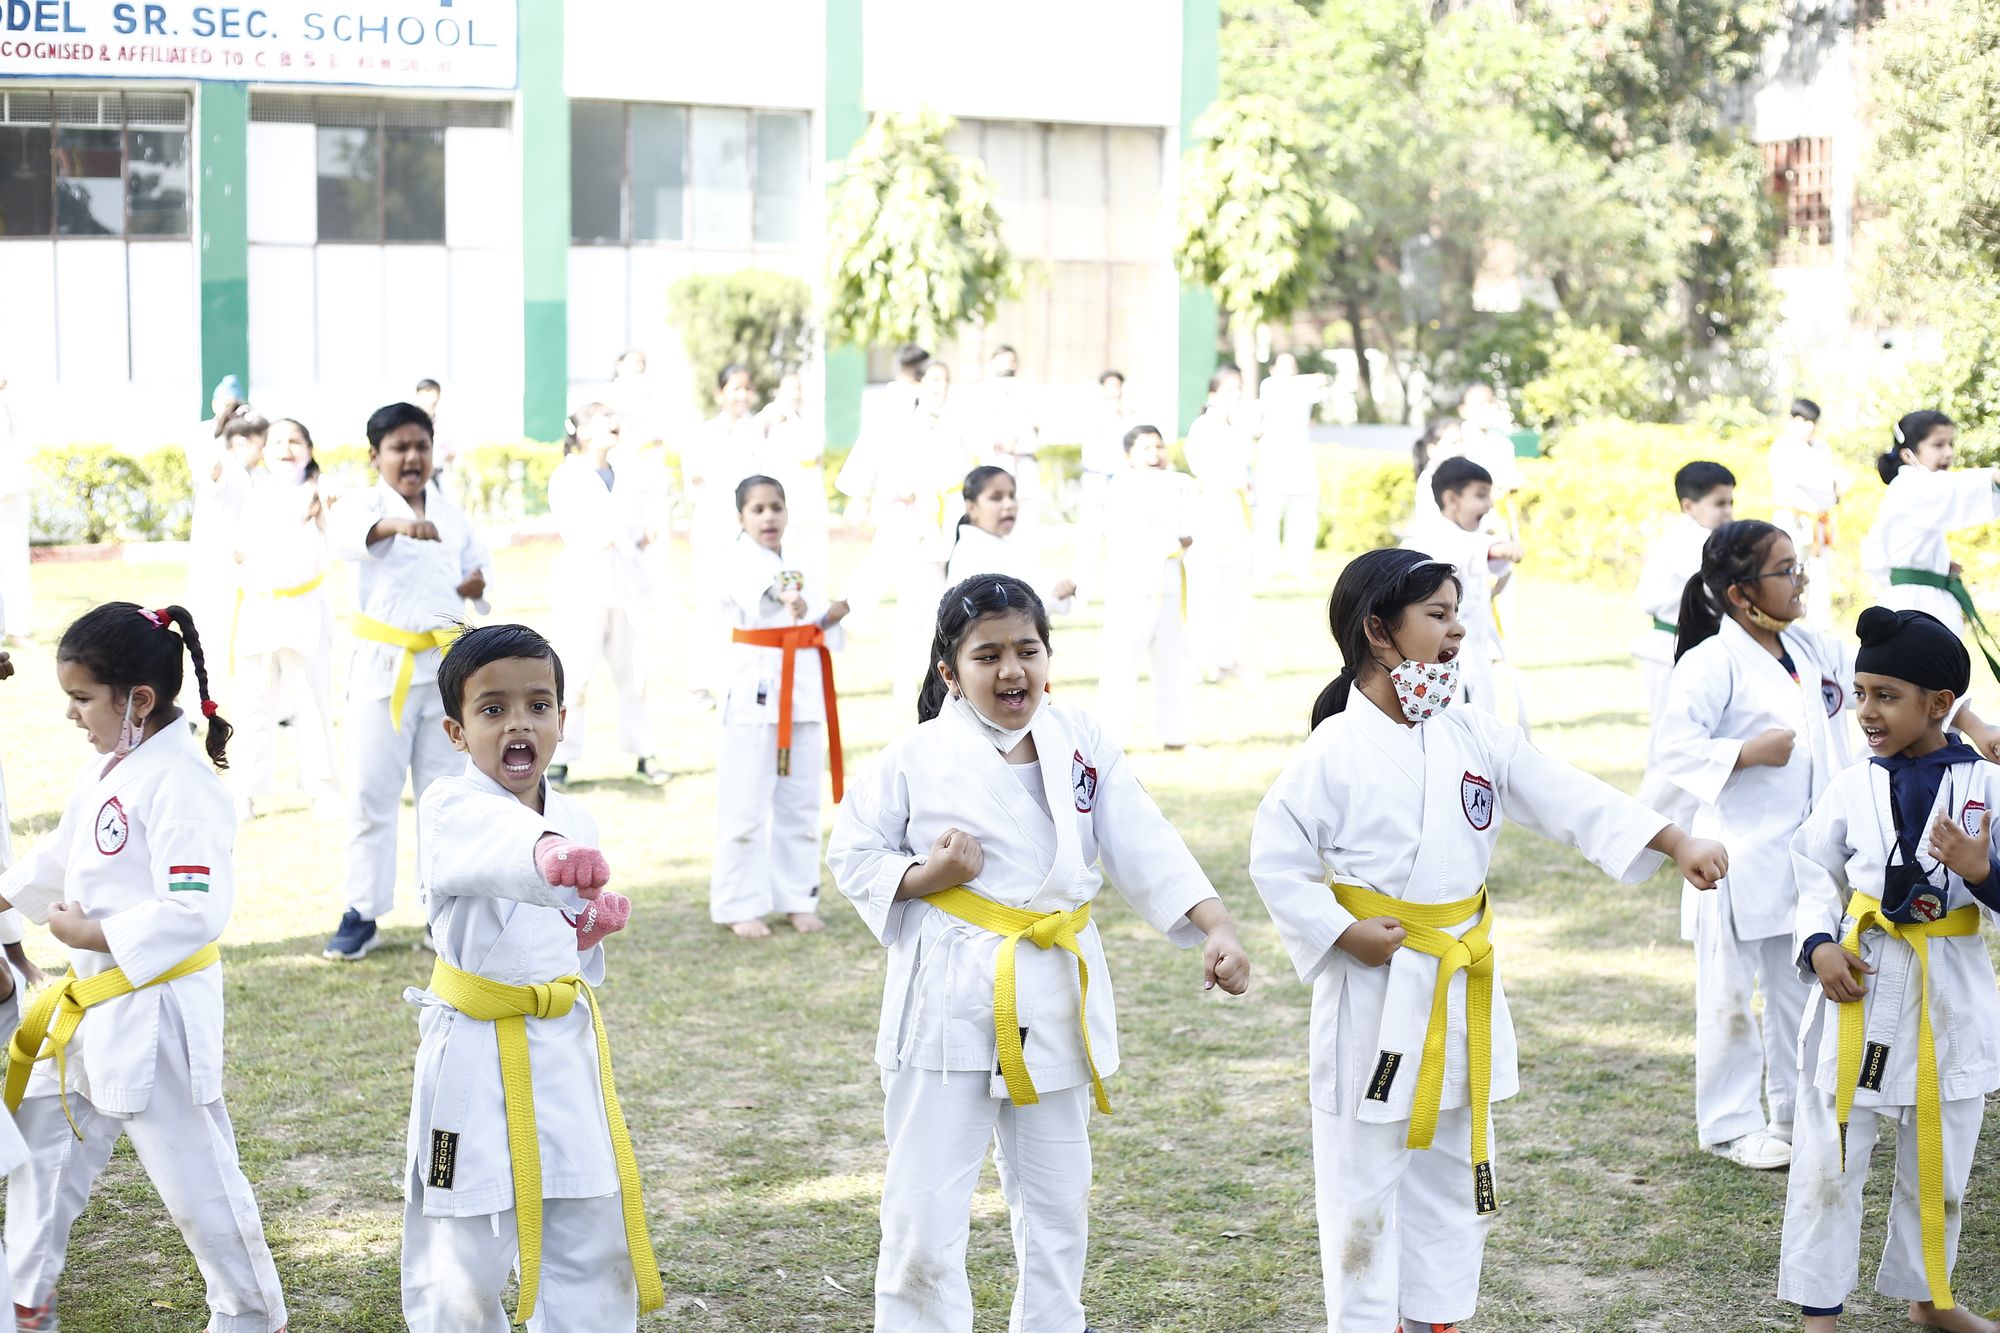 Shotokan Karate Belt Grading Test and Camp at Gyandeep School Sector 20-C, Chandigarh 13-03-2022.